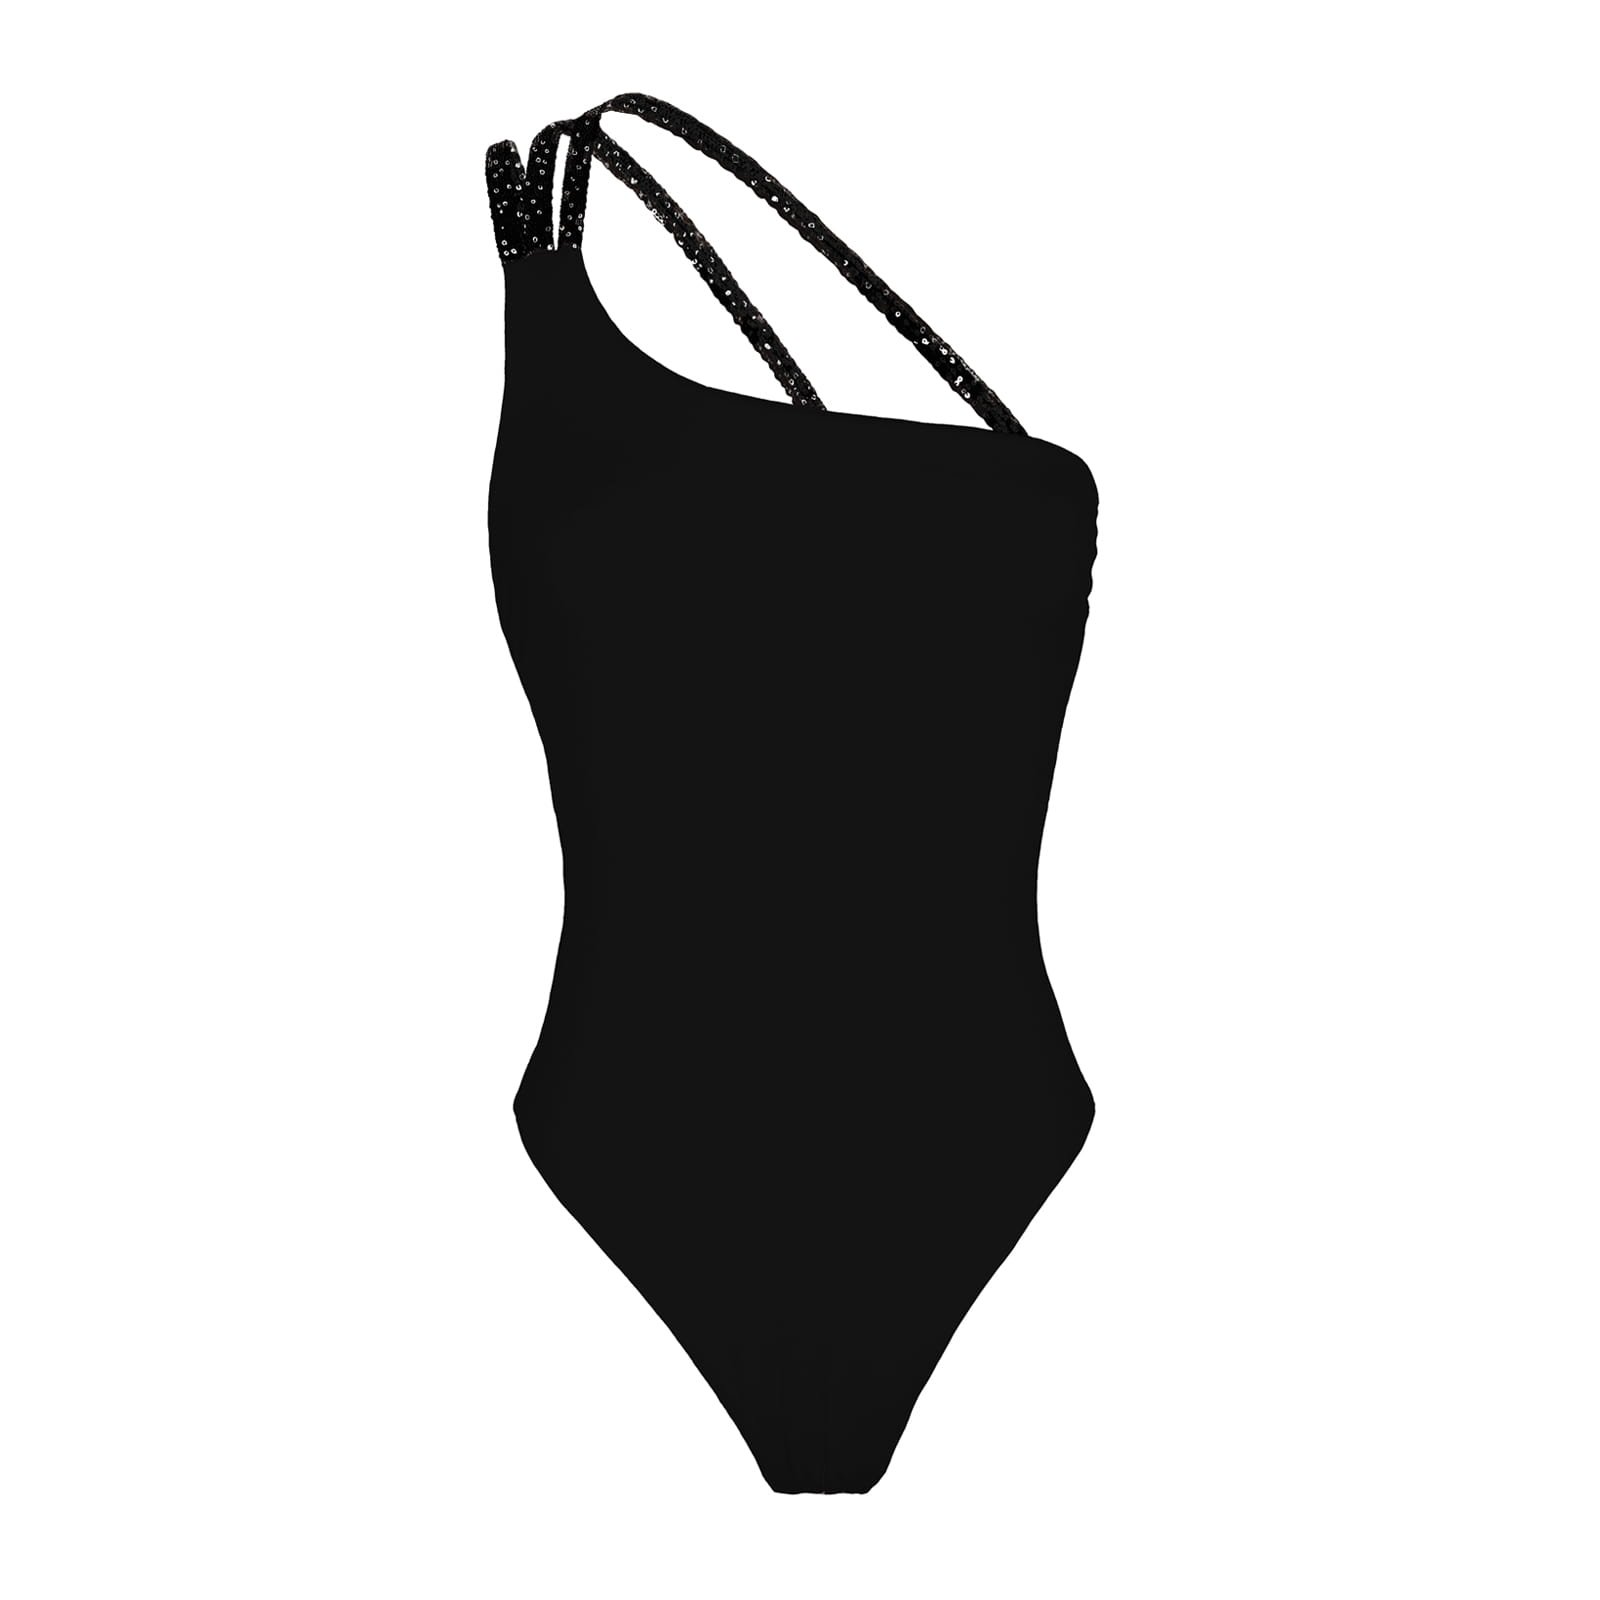 Etoile one piece swimsuit white black salmon one shoulder bikini summer 2020 2021 costume intero monospalla nero bianco salmone rosa arancio nero skims bodysuit kinda 3d swimwear